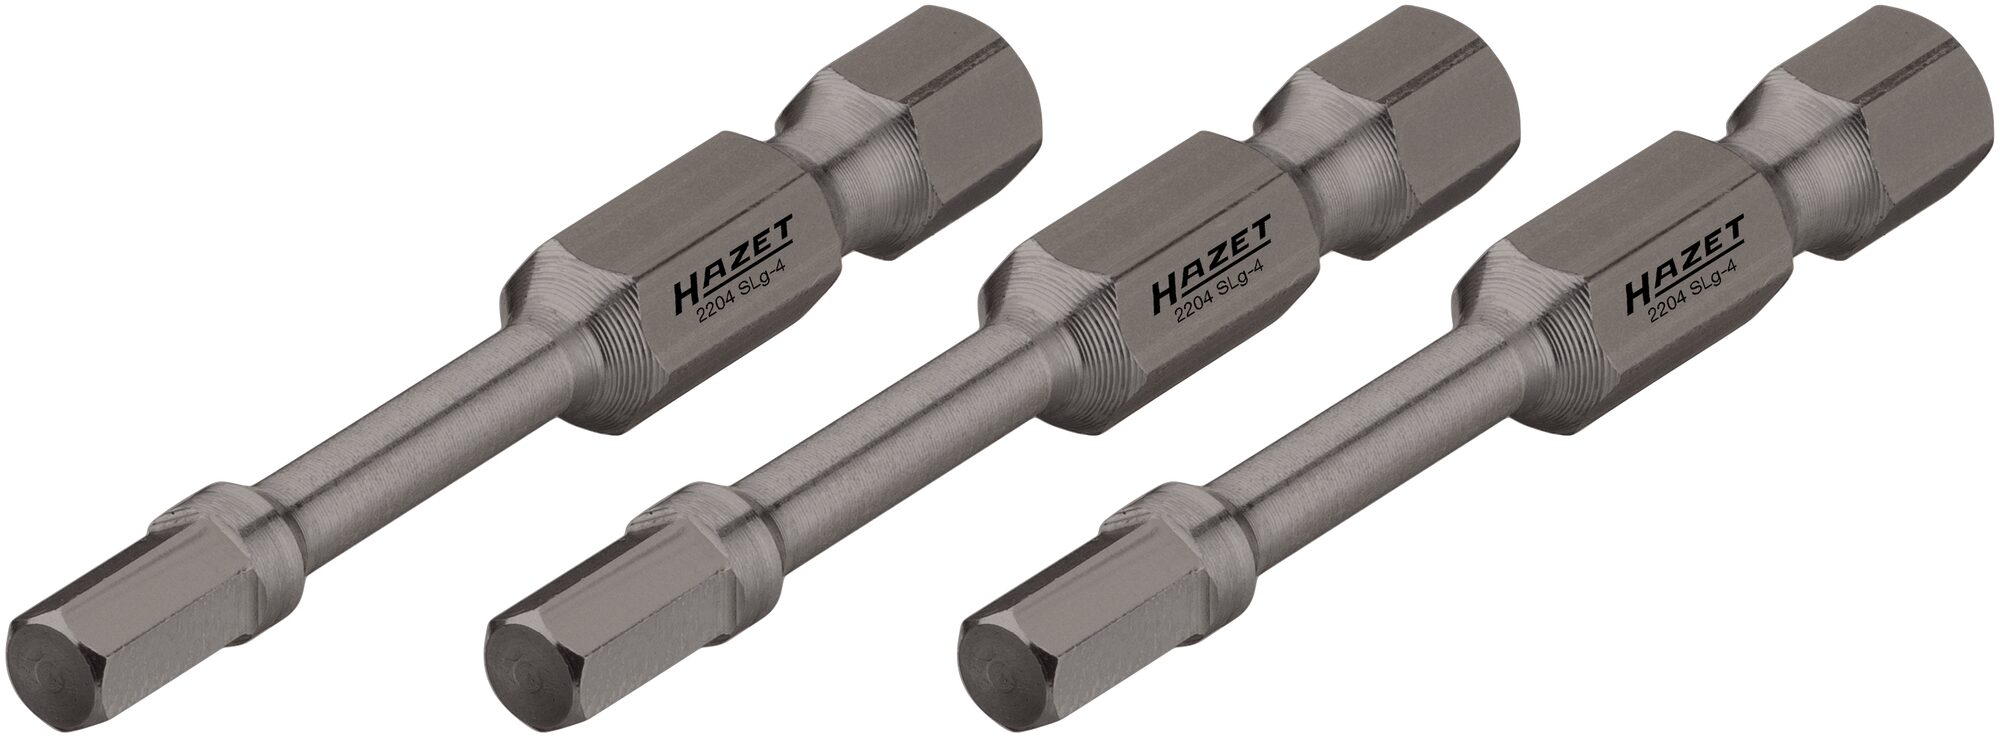 HAZET Schlag-, Maschinenschrauber Torsions-Bits 2204SLG-4/3 · Sechskant massiv 6,3 (1/4 Zoll) · Innen Sechskant Profil · 4 mm · Anzahl Werkzeuge: 3